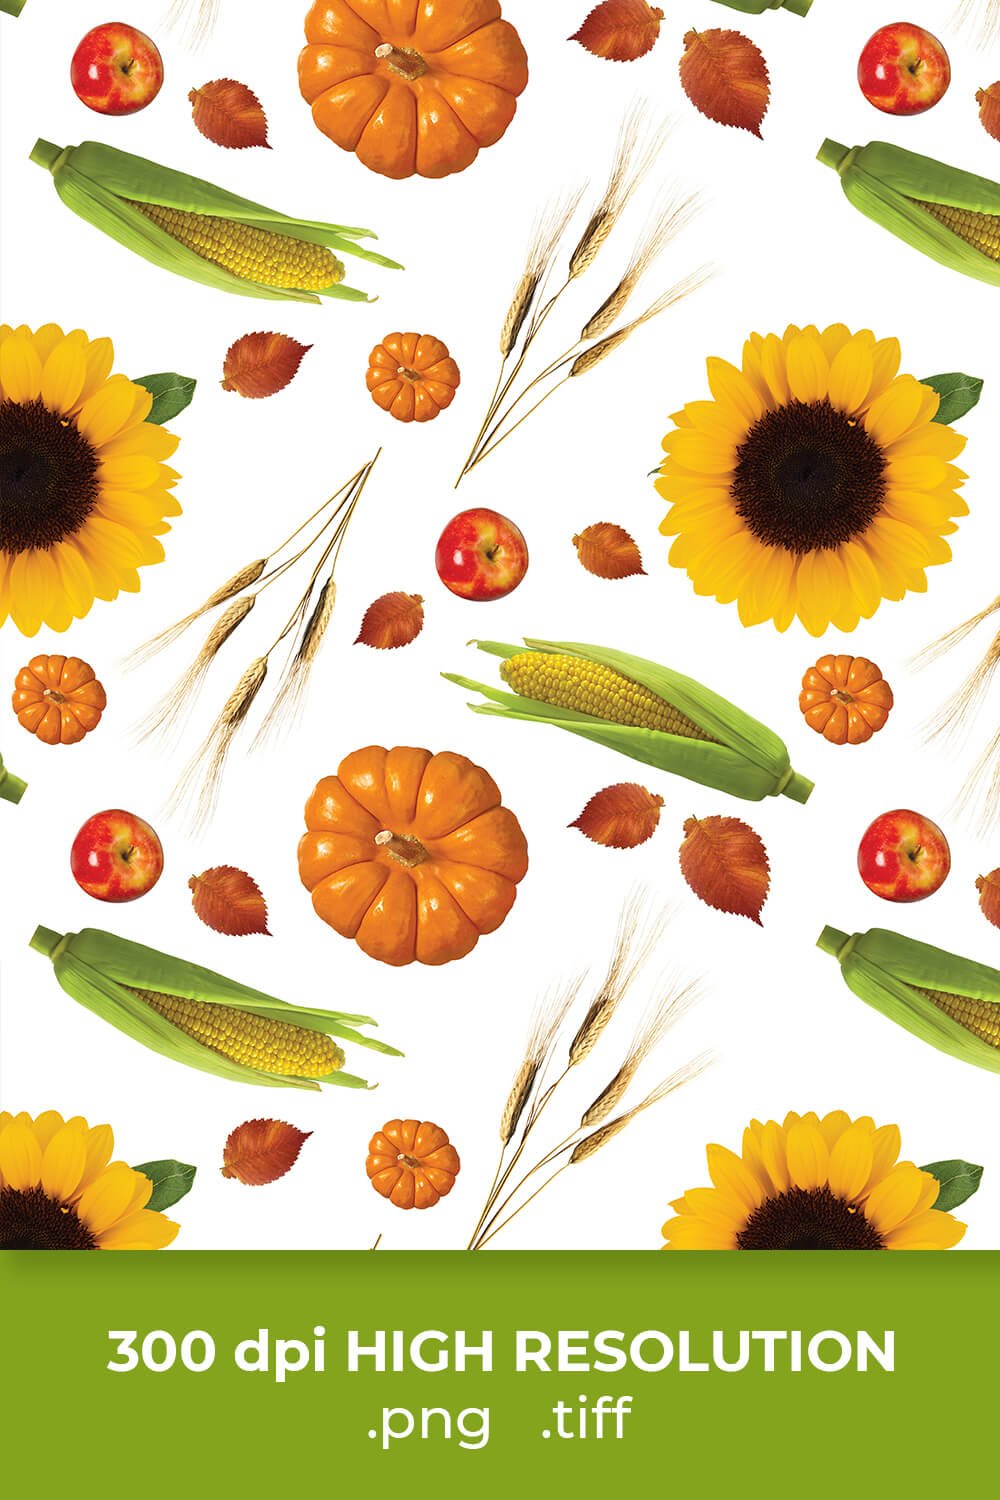 Free Corn & Sunflowers Patterns pinterest image.